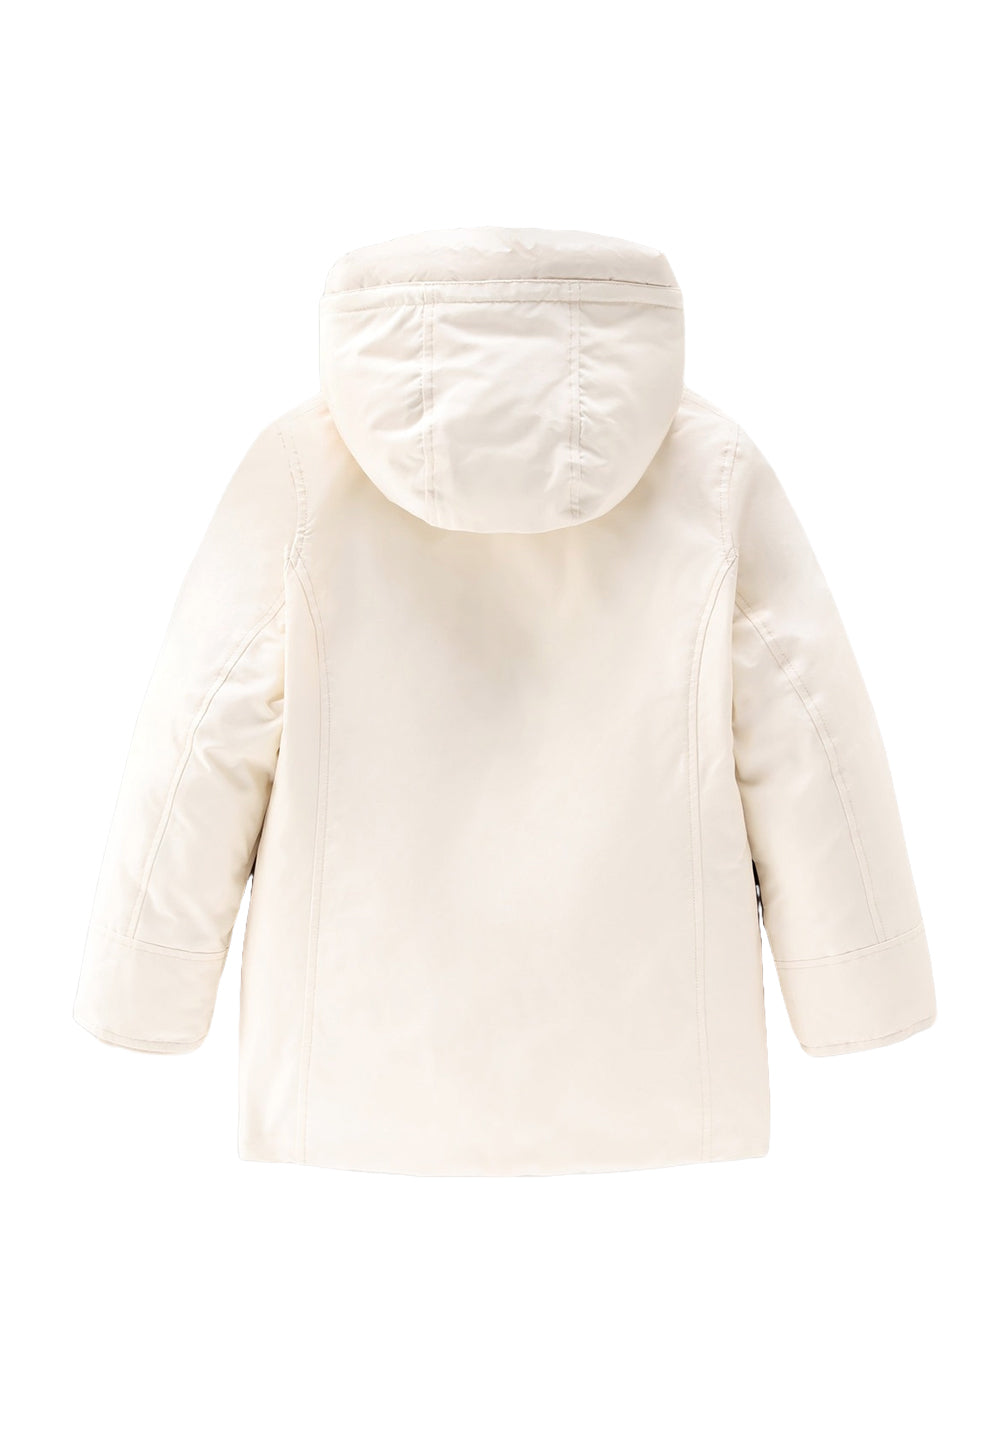 Cream parka jacket for girls